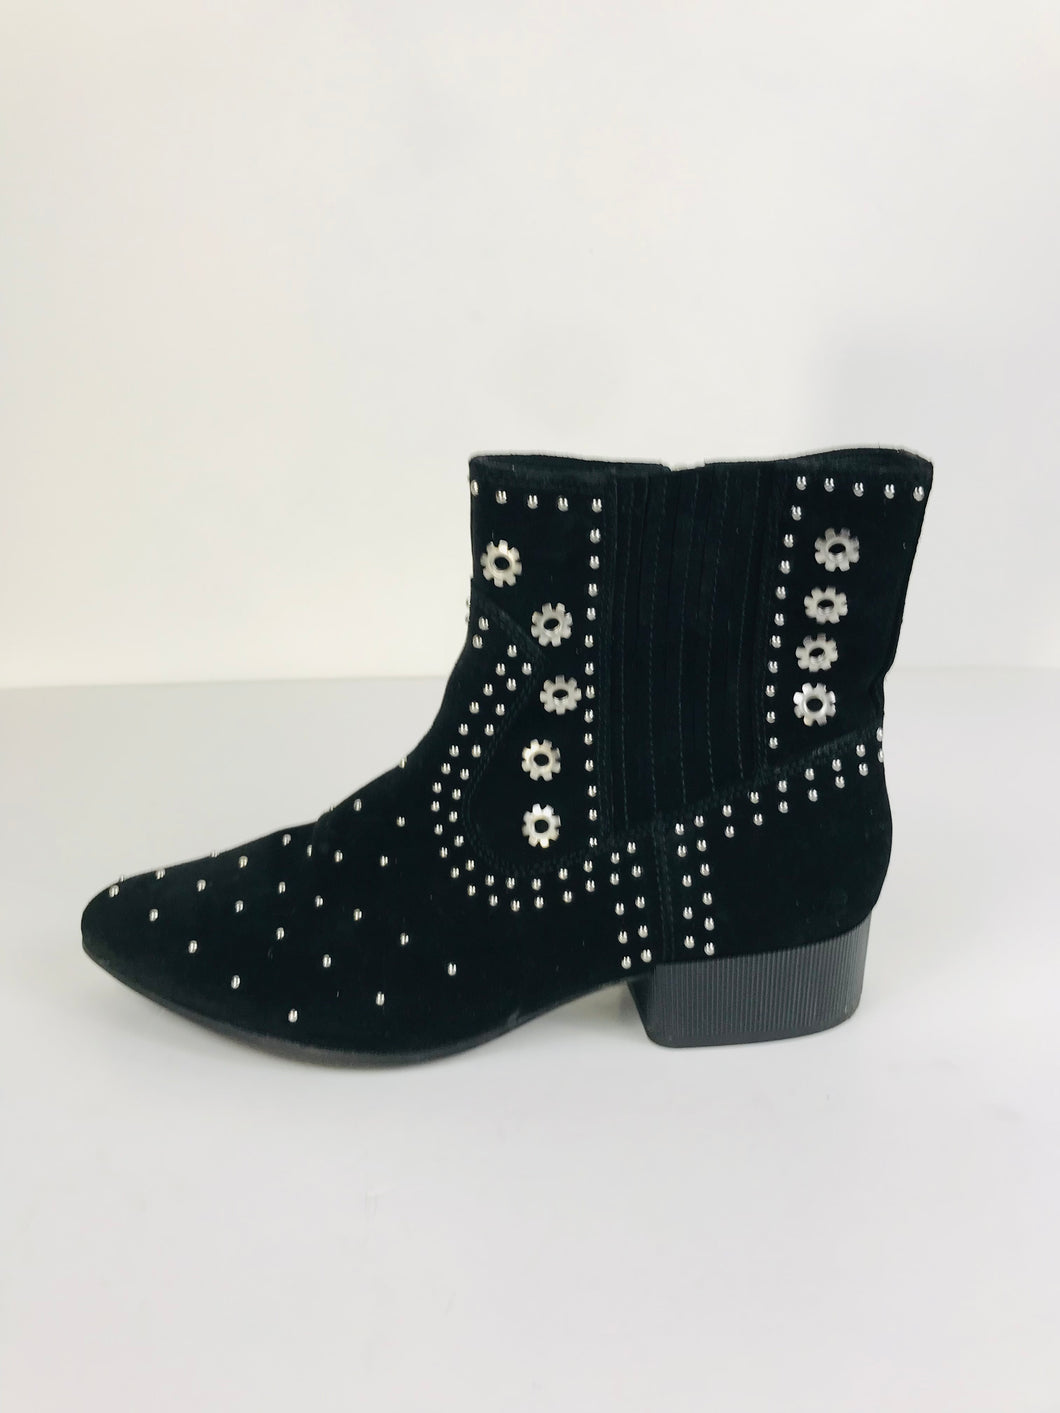 Geox Women's Studded Boots | 40 UK7 | Black